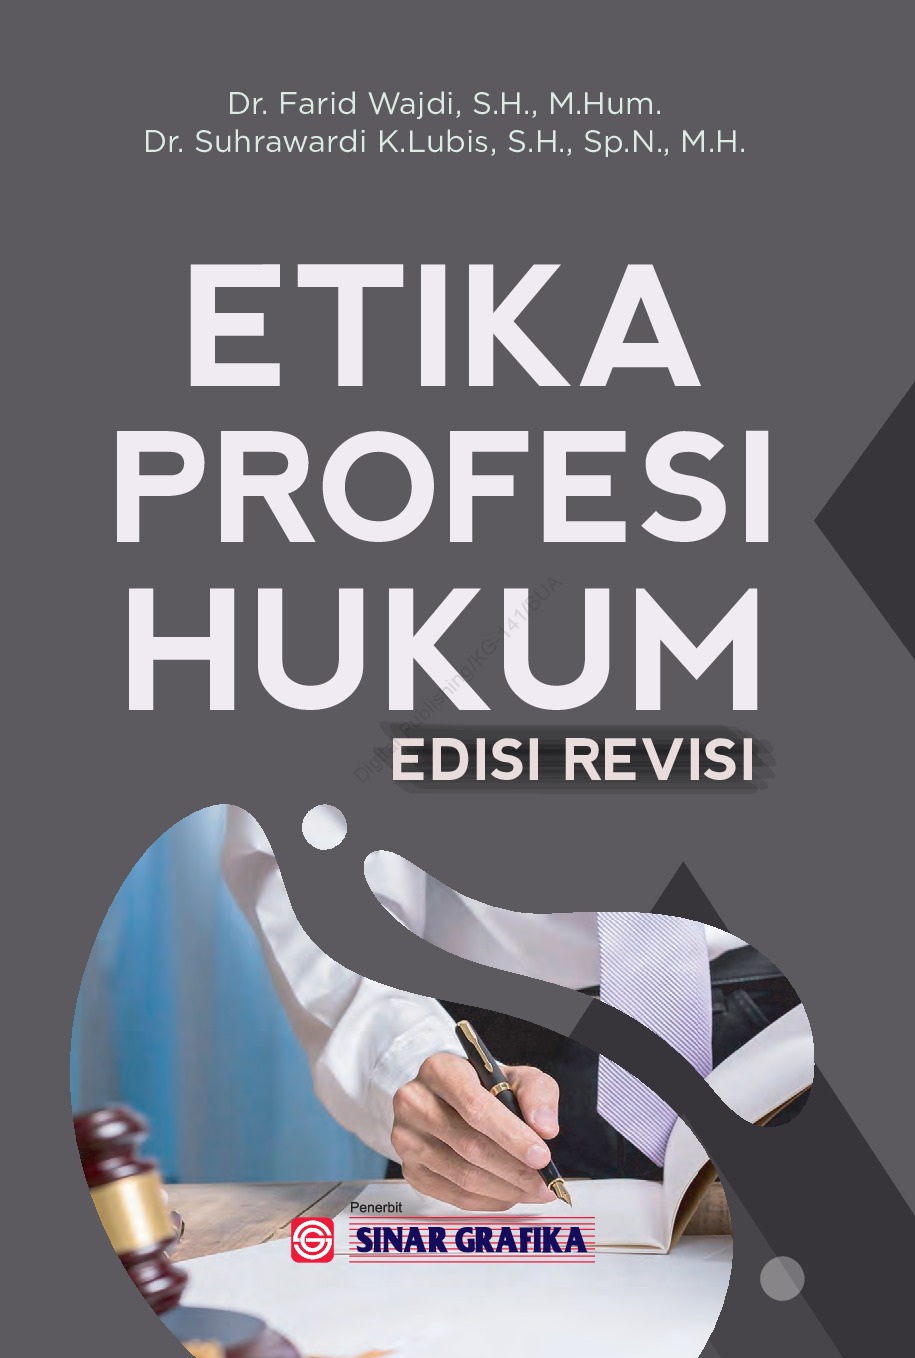 Etika profesi hukum edisi revisi